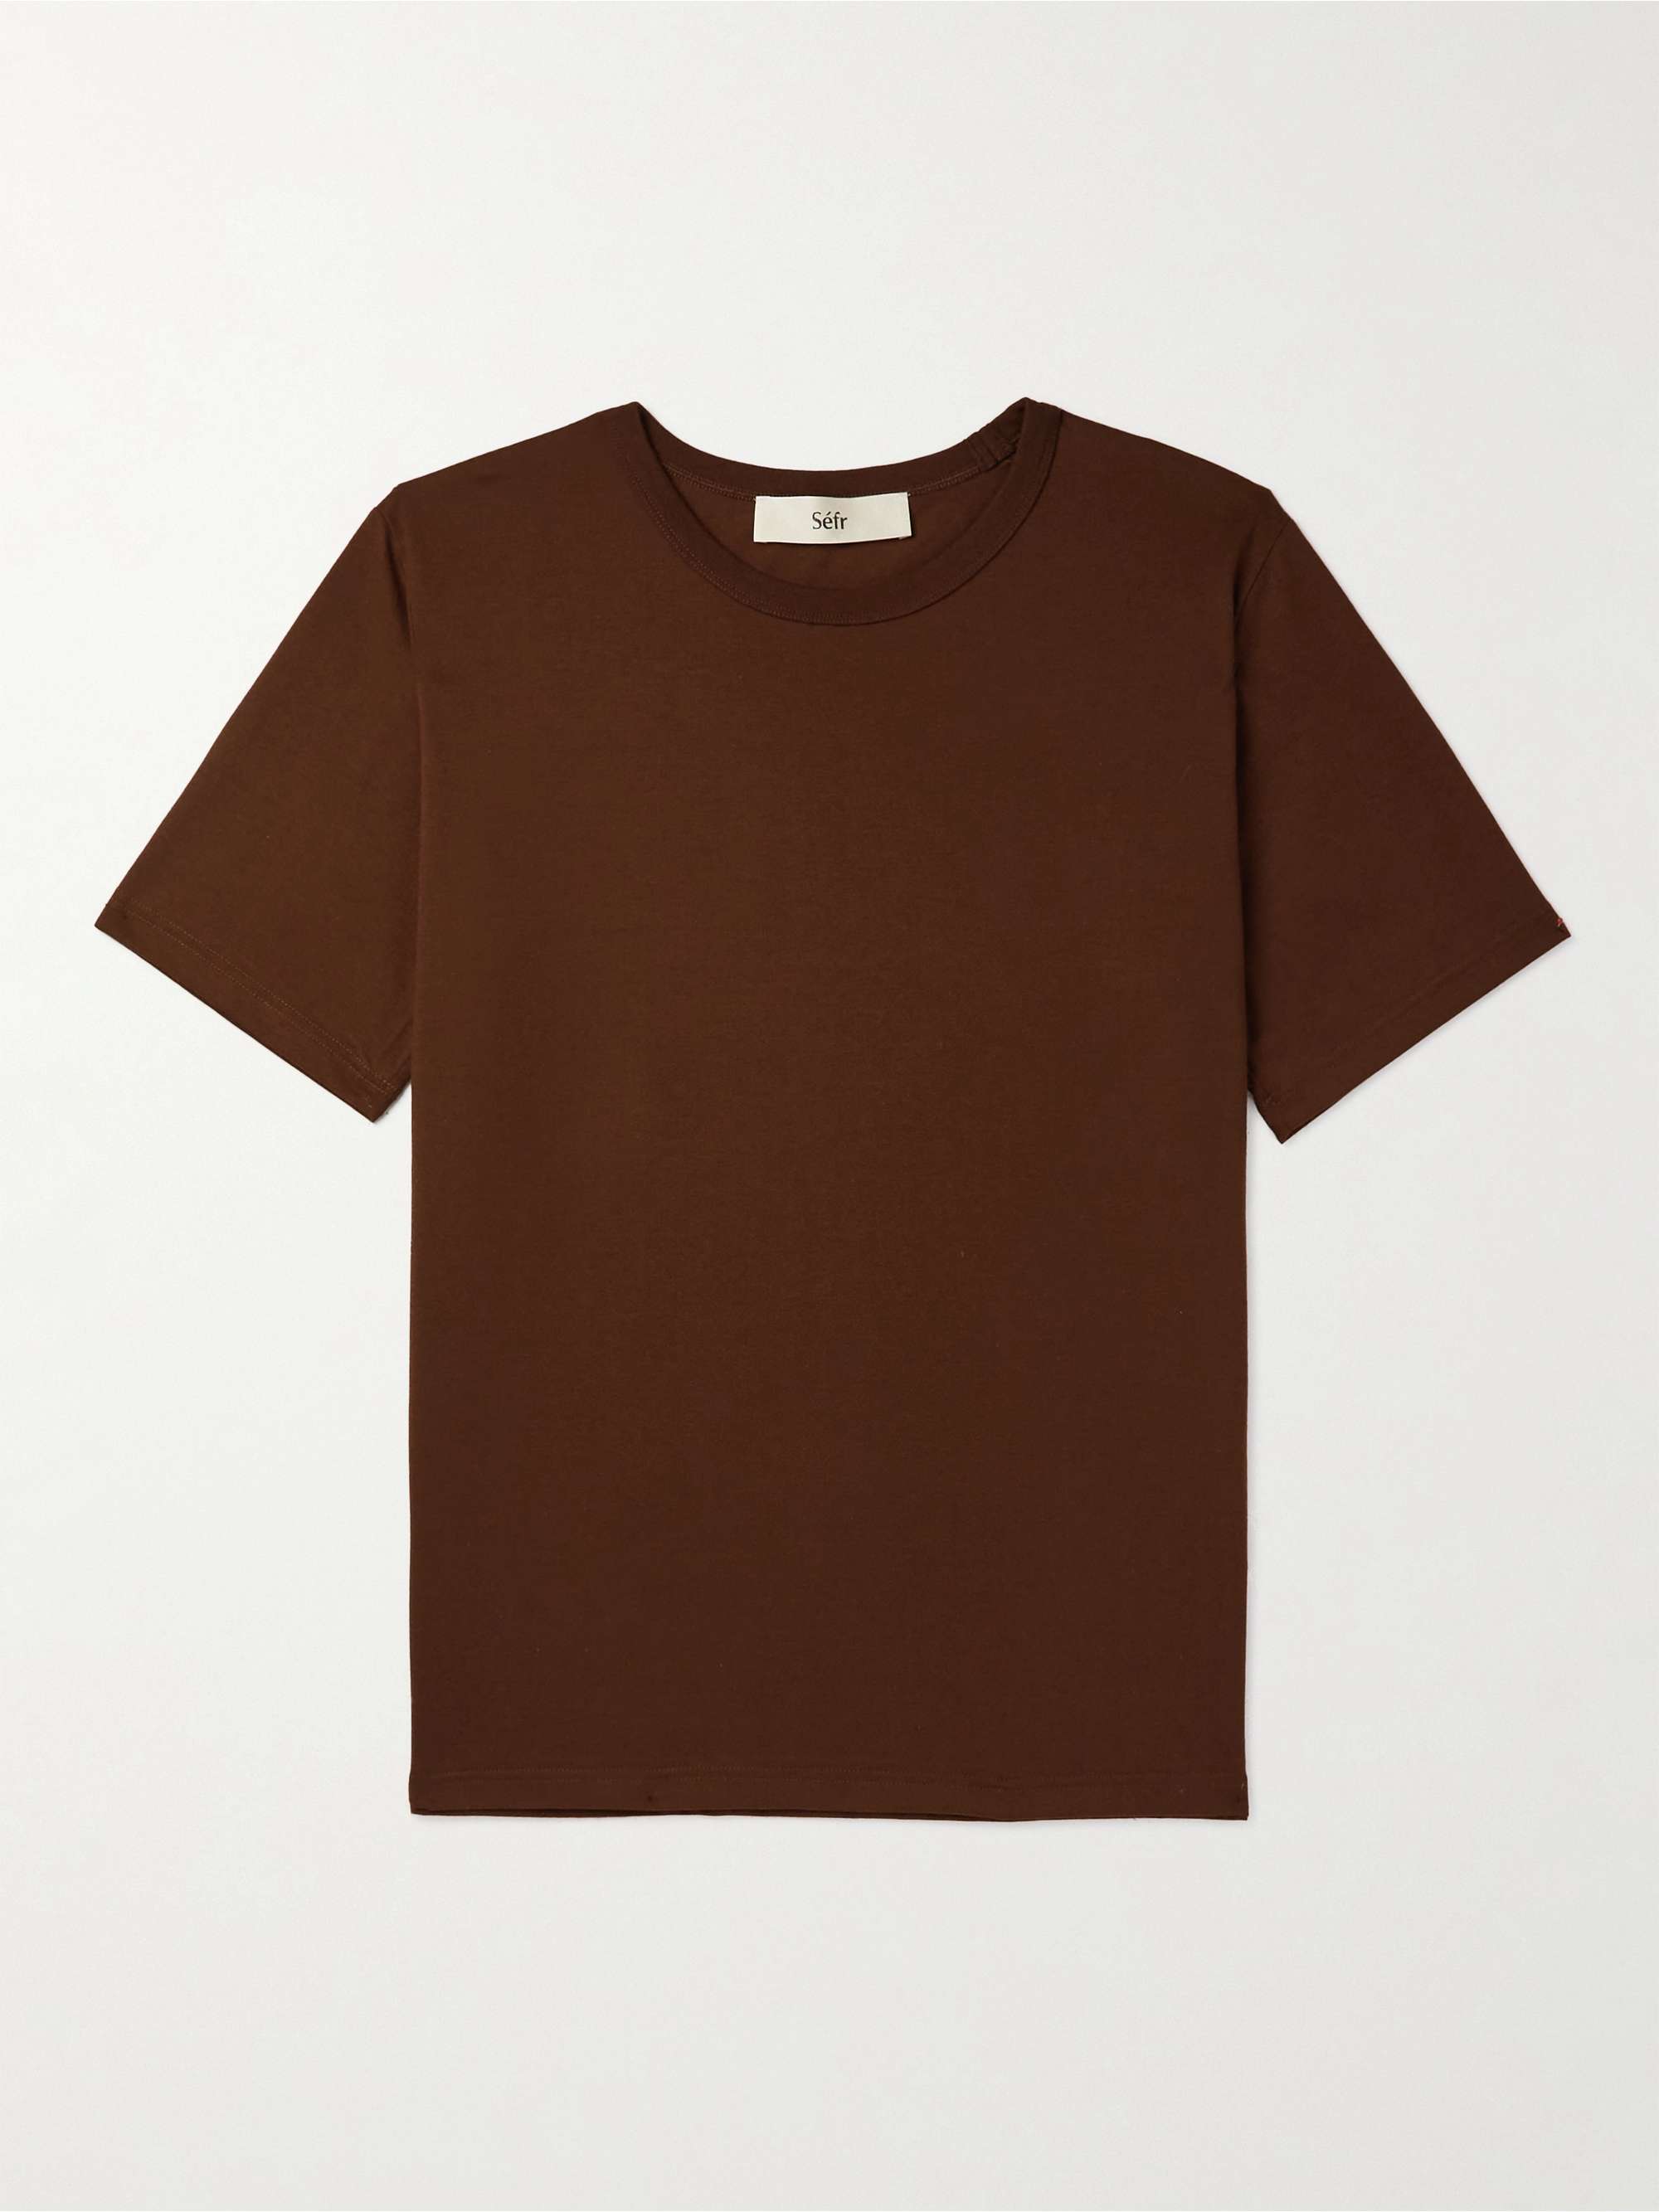 SÉFR Luca Cotton-Blend Jersey T-Shirt for Men | MR PORTER